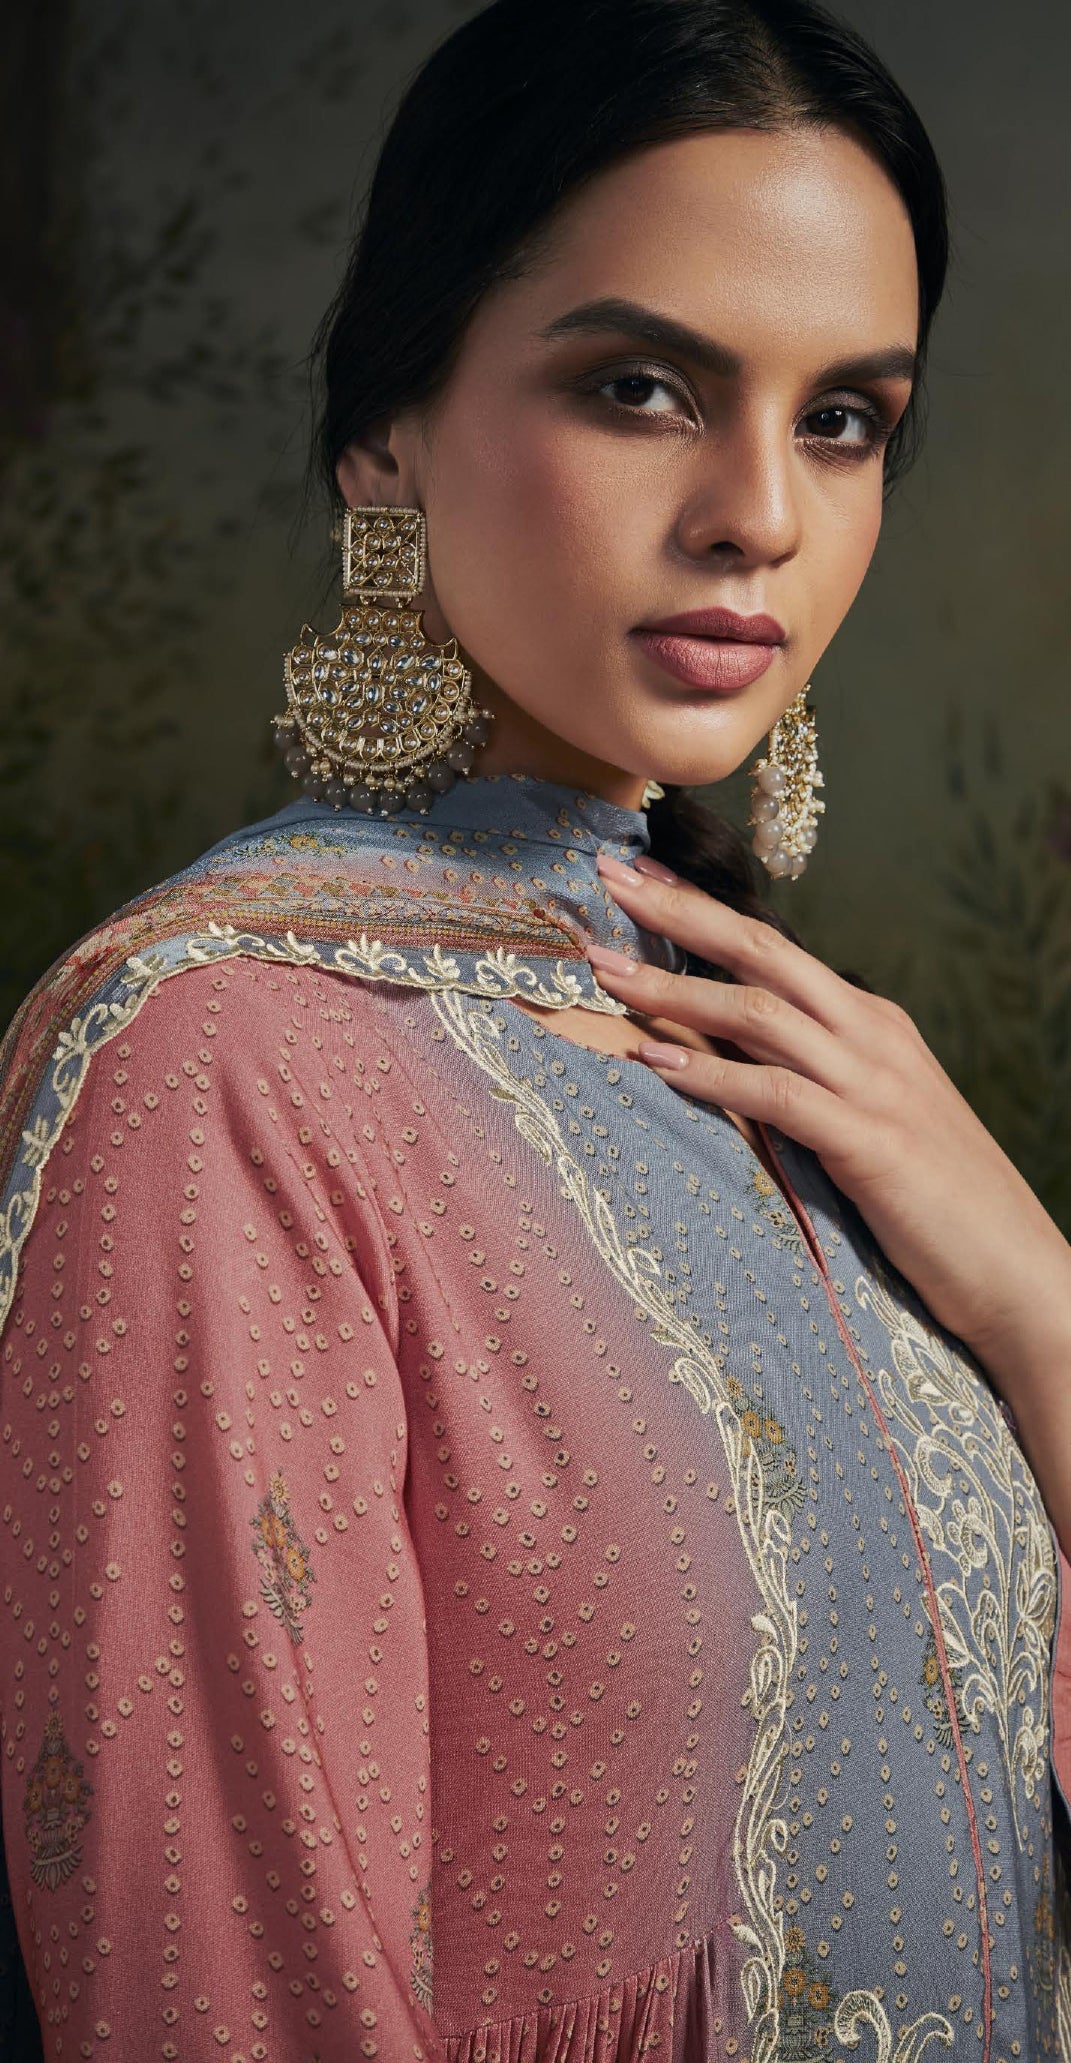 Elegant Pink Maslin Silk Salwar Suit with Digital Embroidery for Weddings & Parties